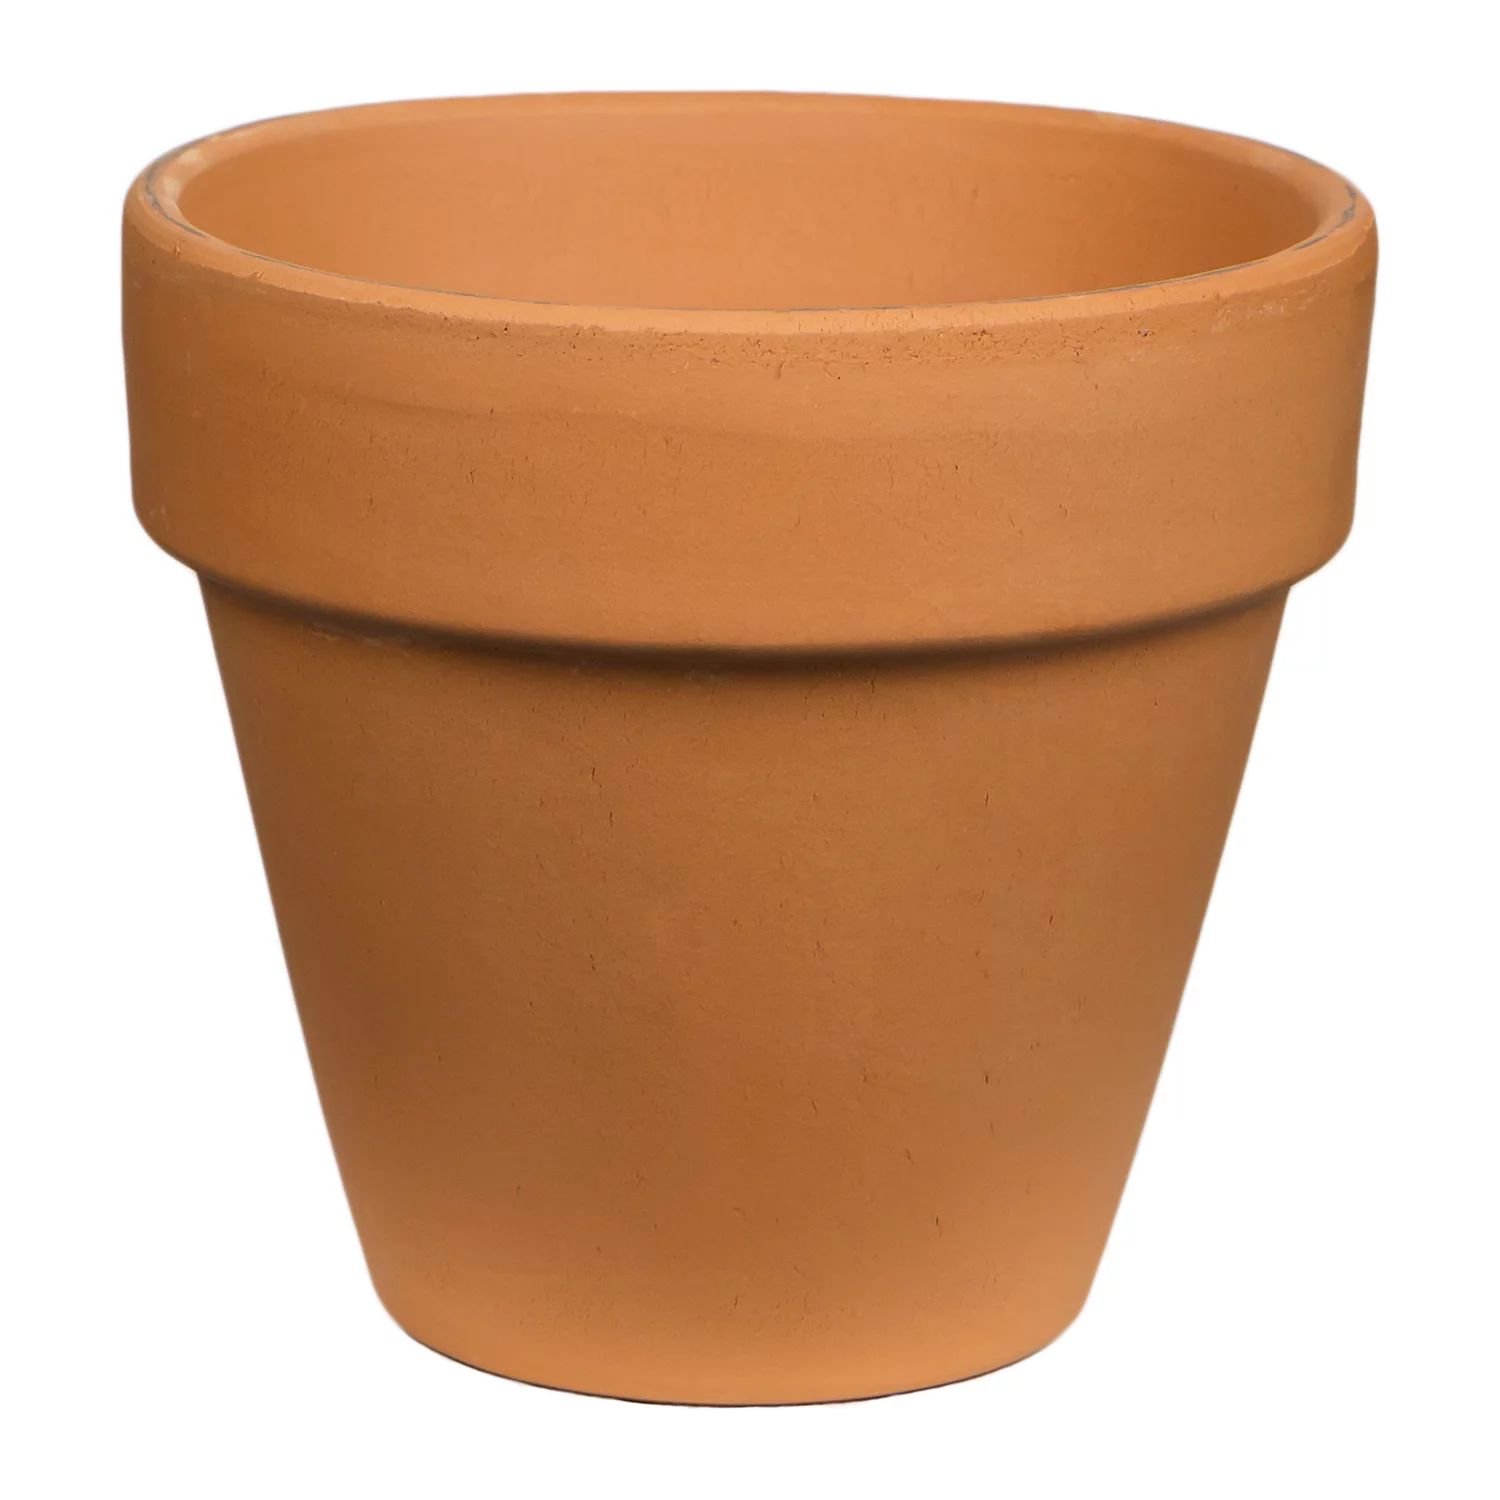 Pennington Red Terra Cotta Clay Planter, 6 inch Pot | Walmart (US)